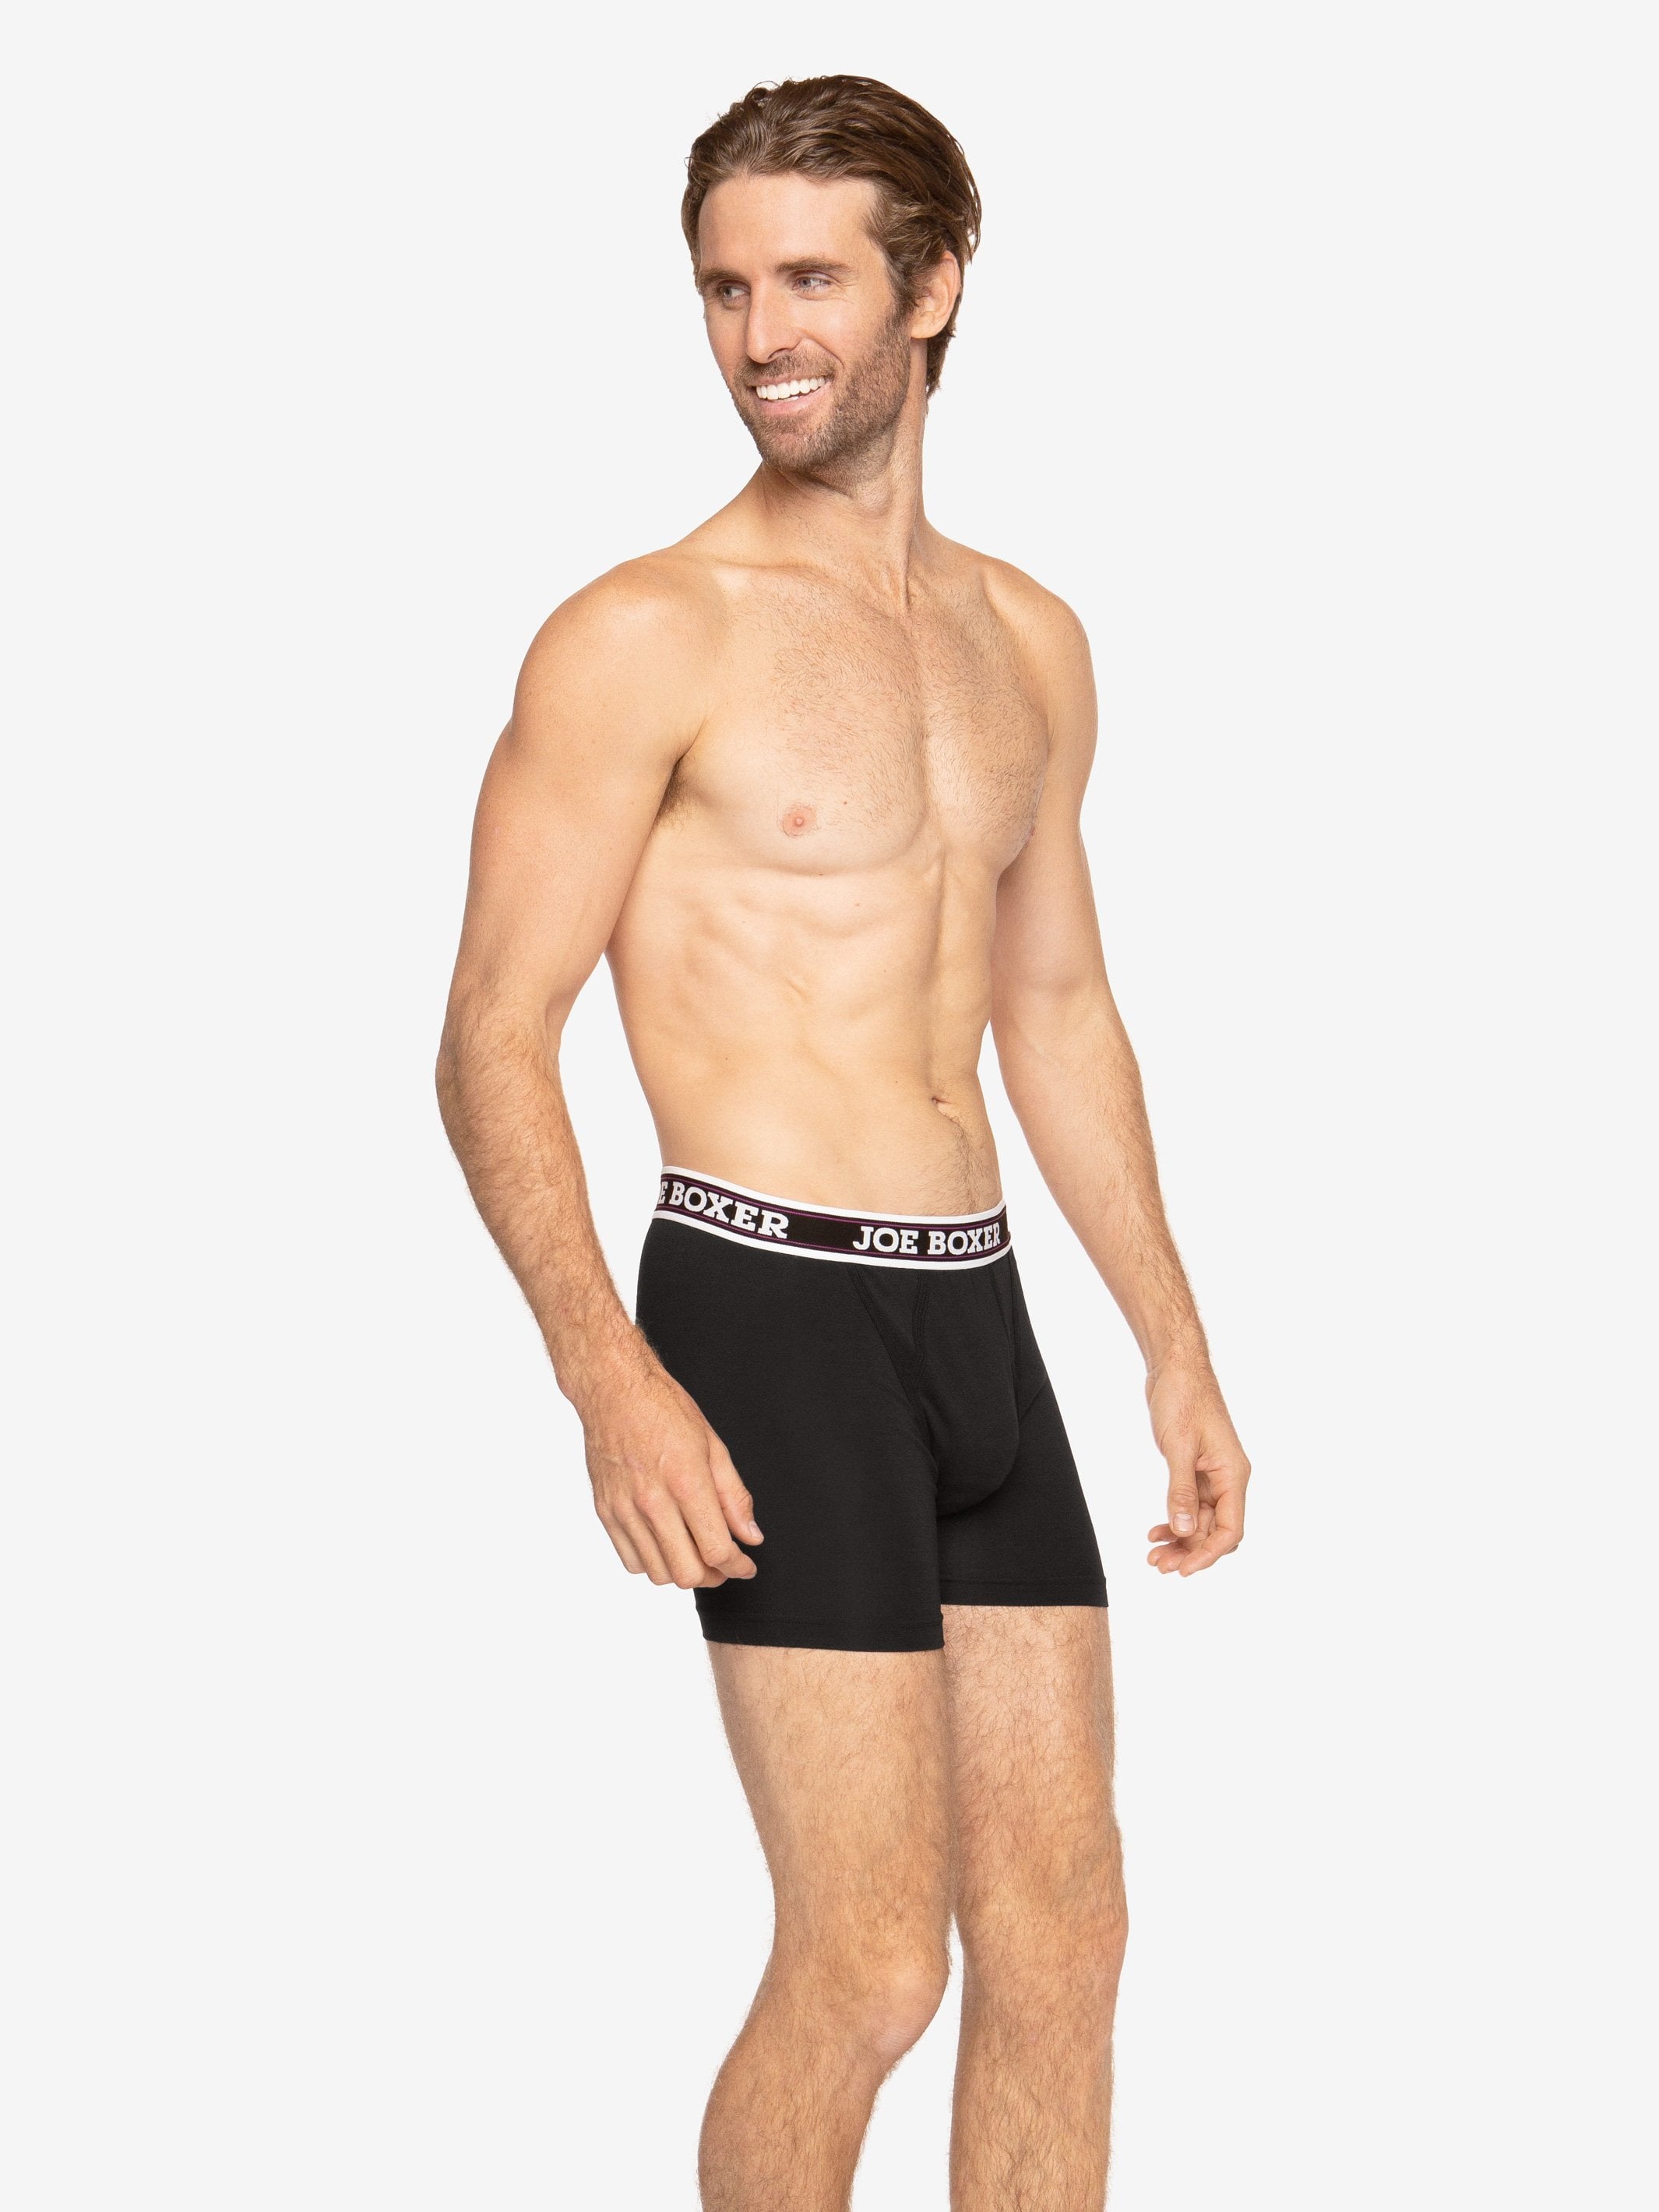 Jockey Men's Underwear Classic Low Rise Brief - 3 Pack, Black, 32 at   Men's Clothing store